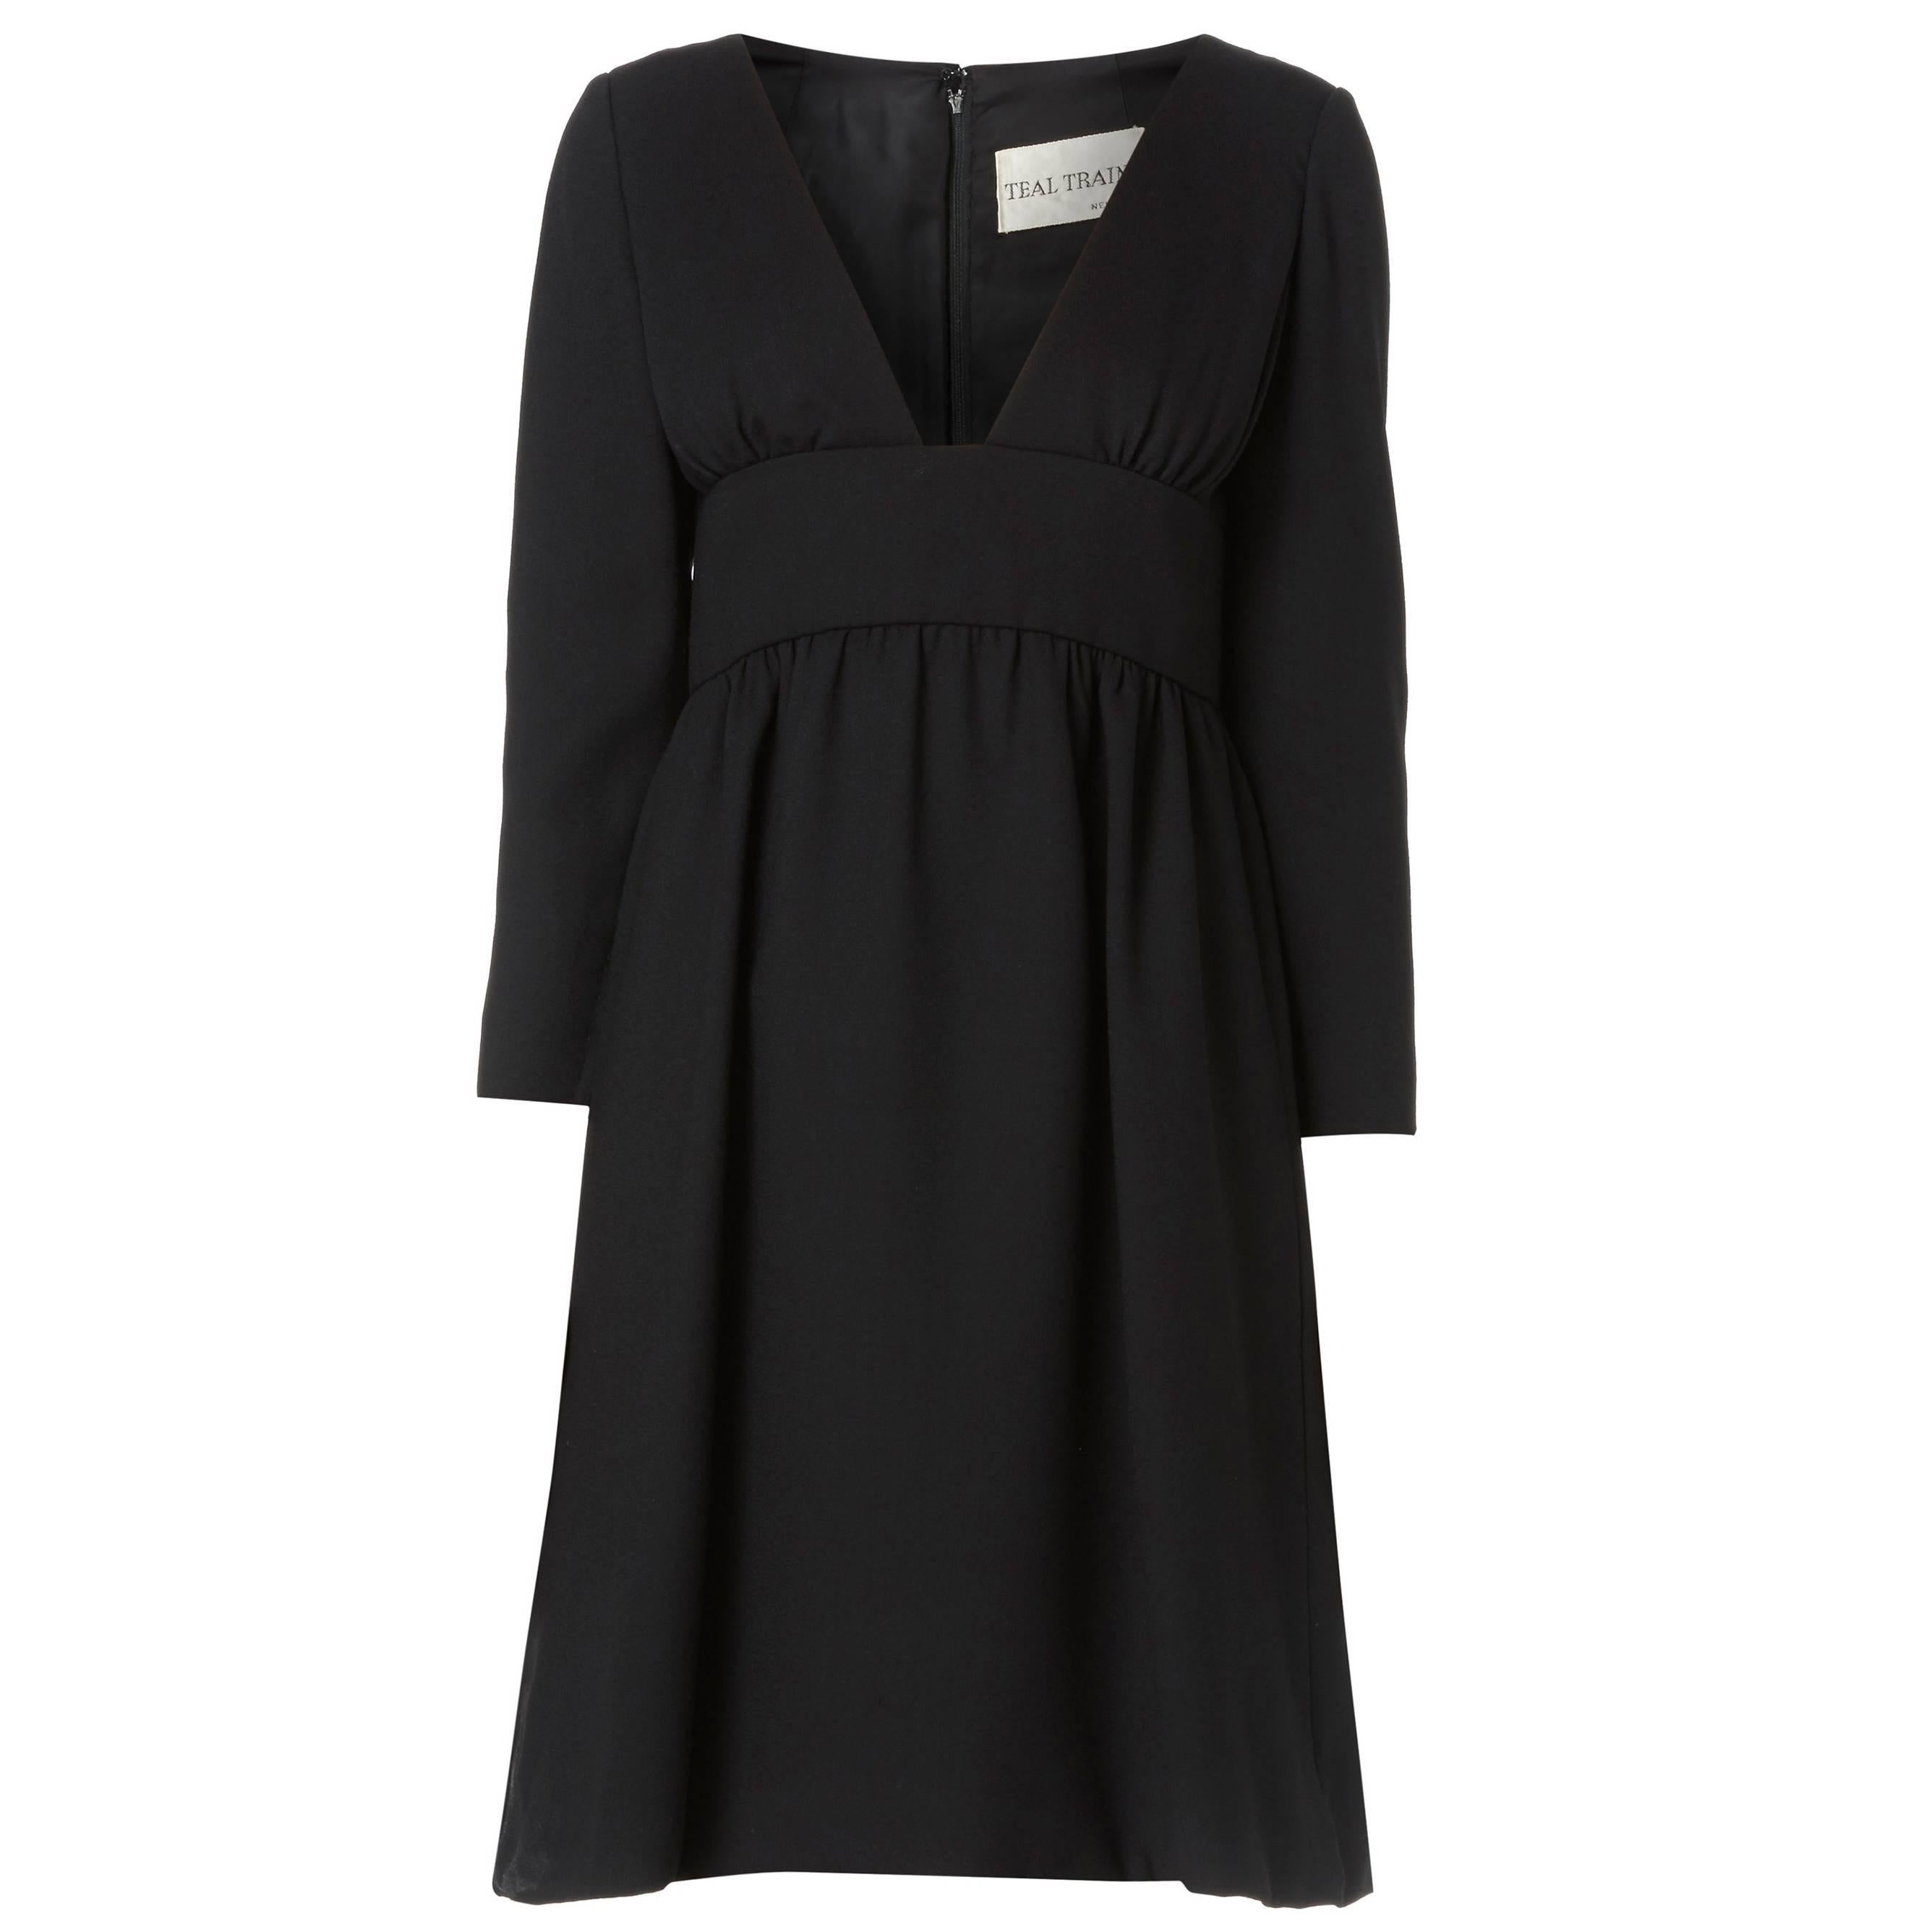 Teal Traina black dress, circa 1968 For Sale